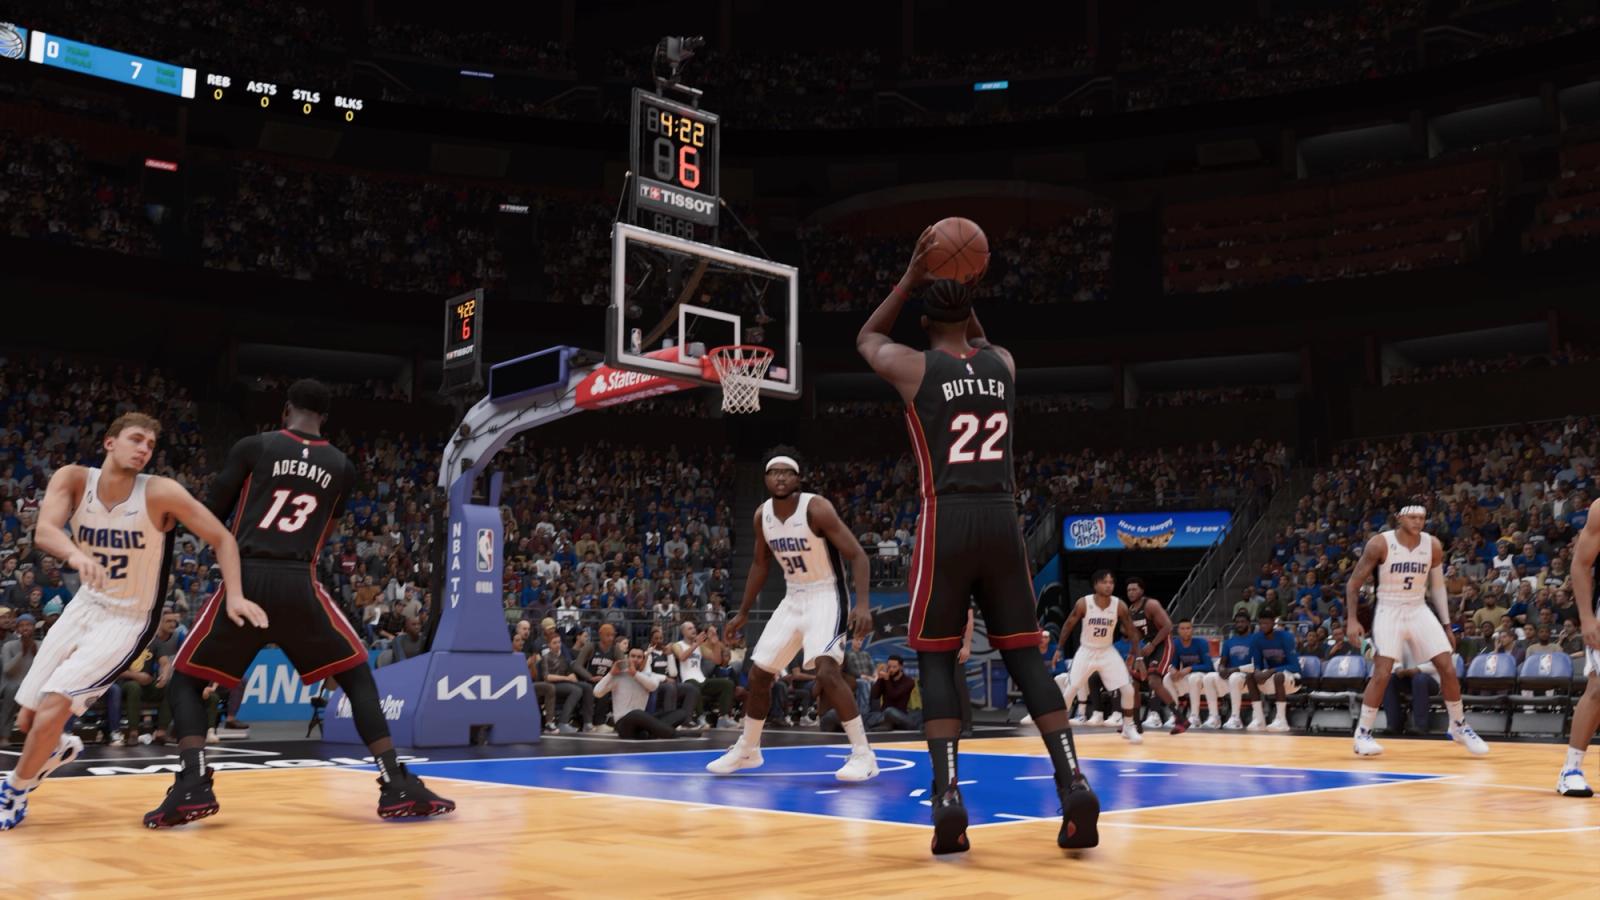 NBA 2K23 update